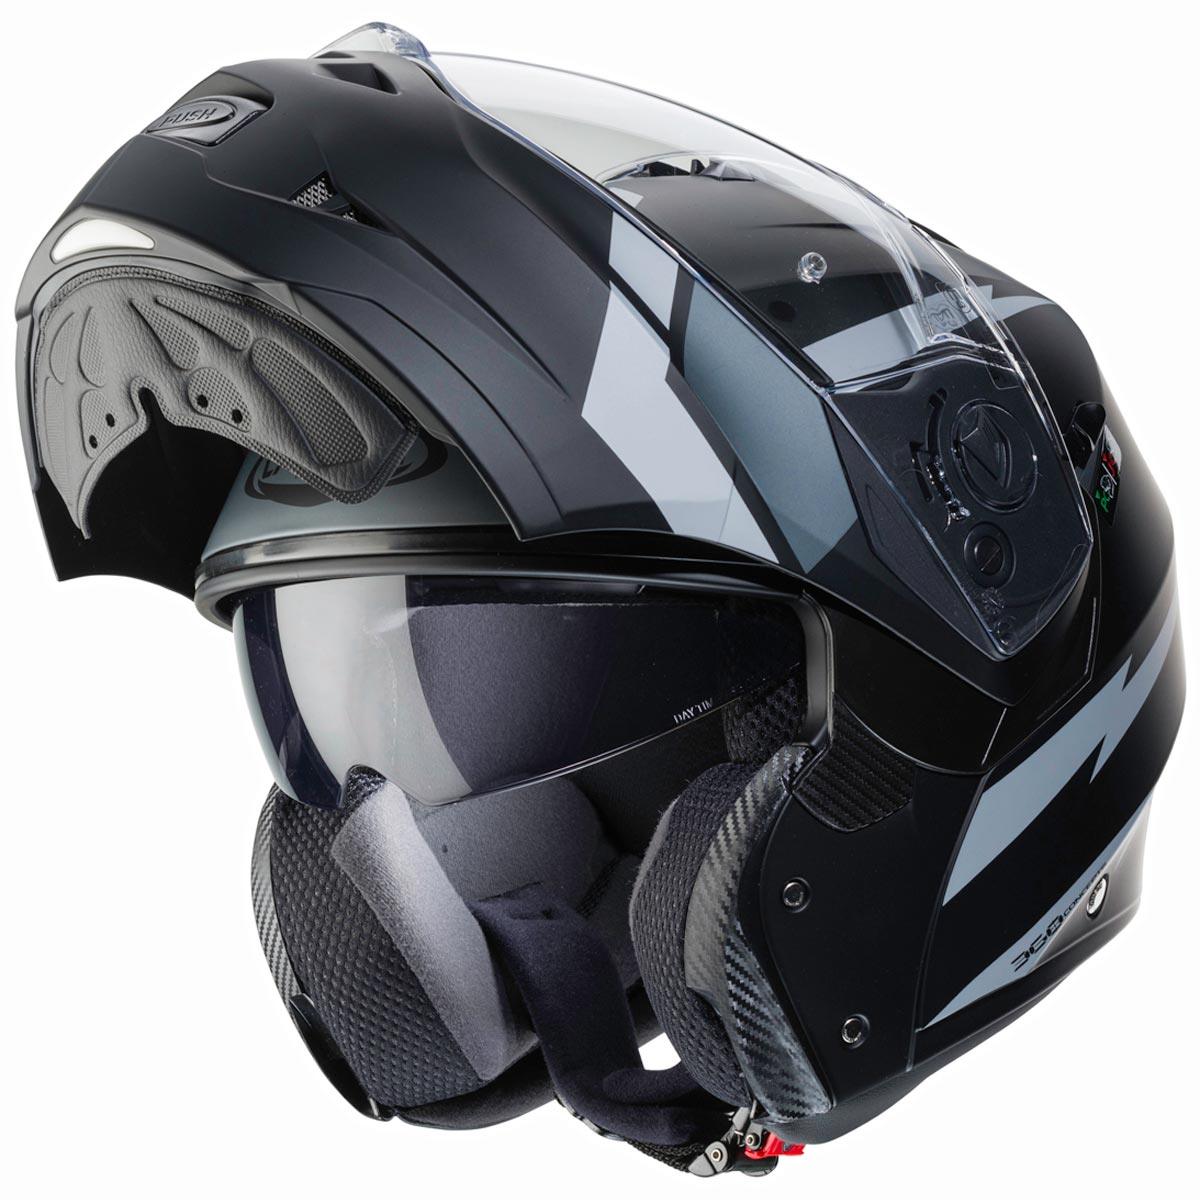 Caberg Duke II Kito Helmet - Black Anthracite - getgearedshop